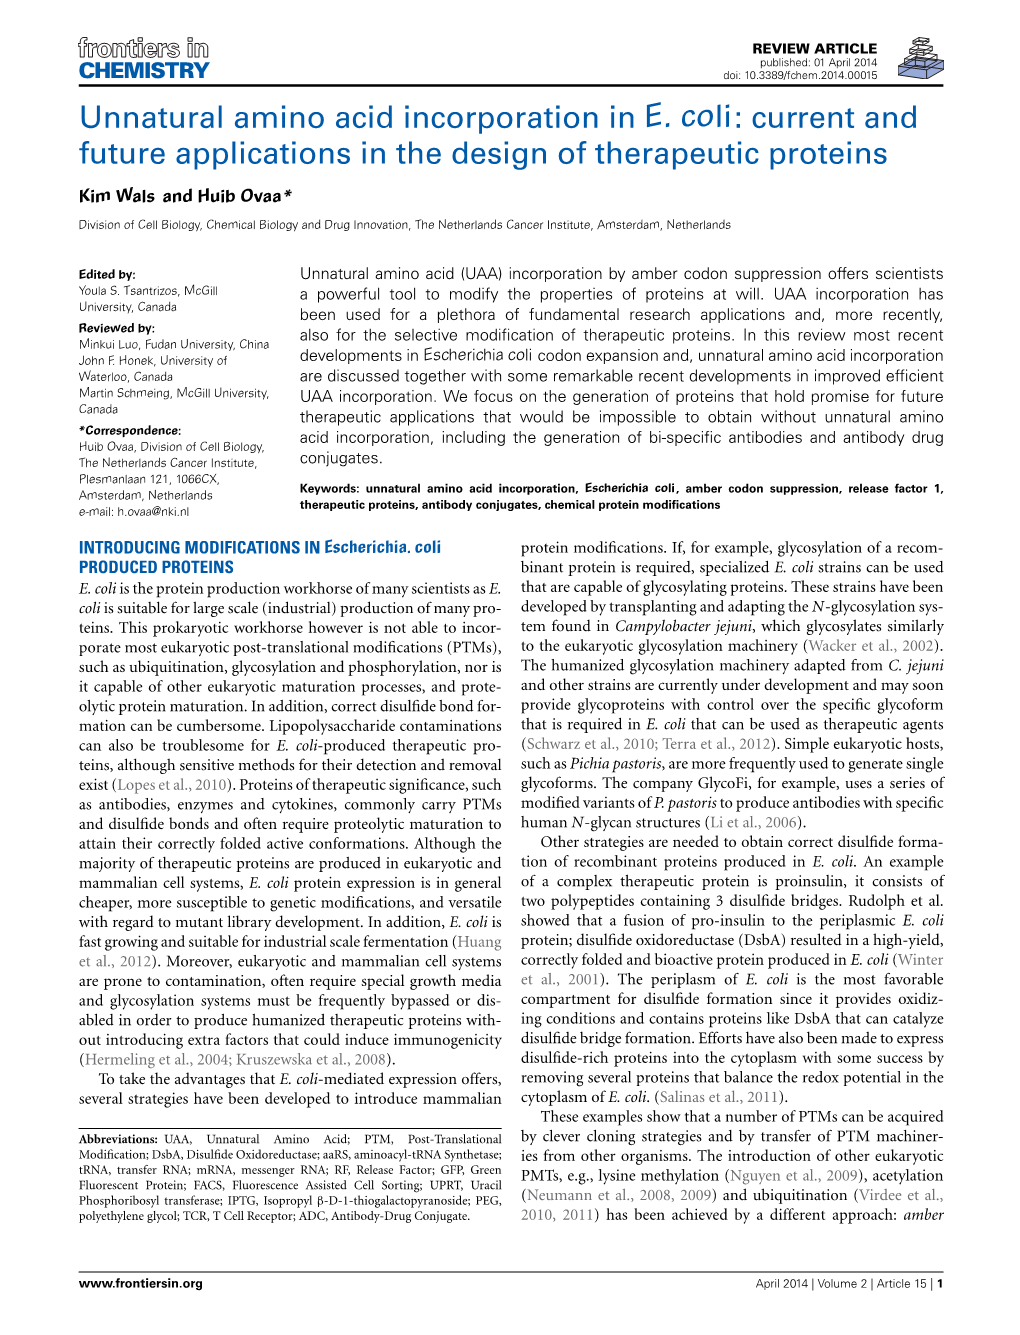 Unnatural Amino Acid Incorporation in E. Coli: Current and Future Applications in the Design of Therapeutic Proteins